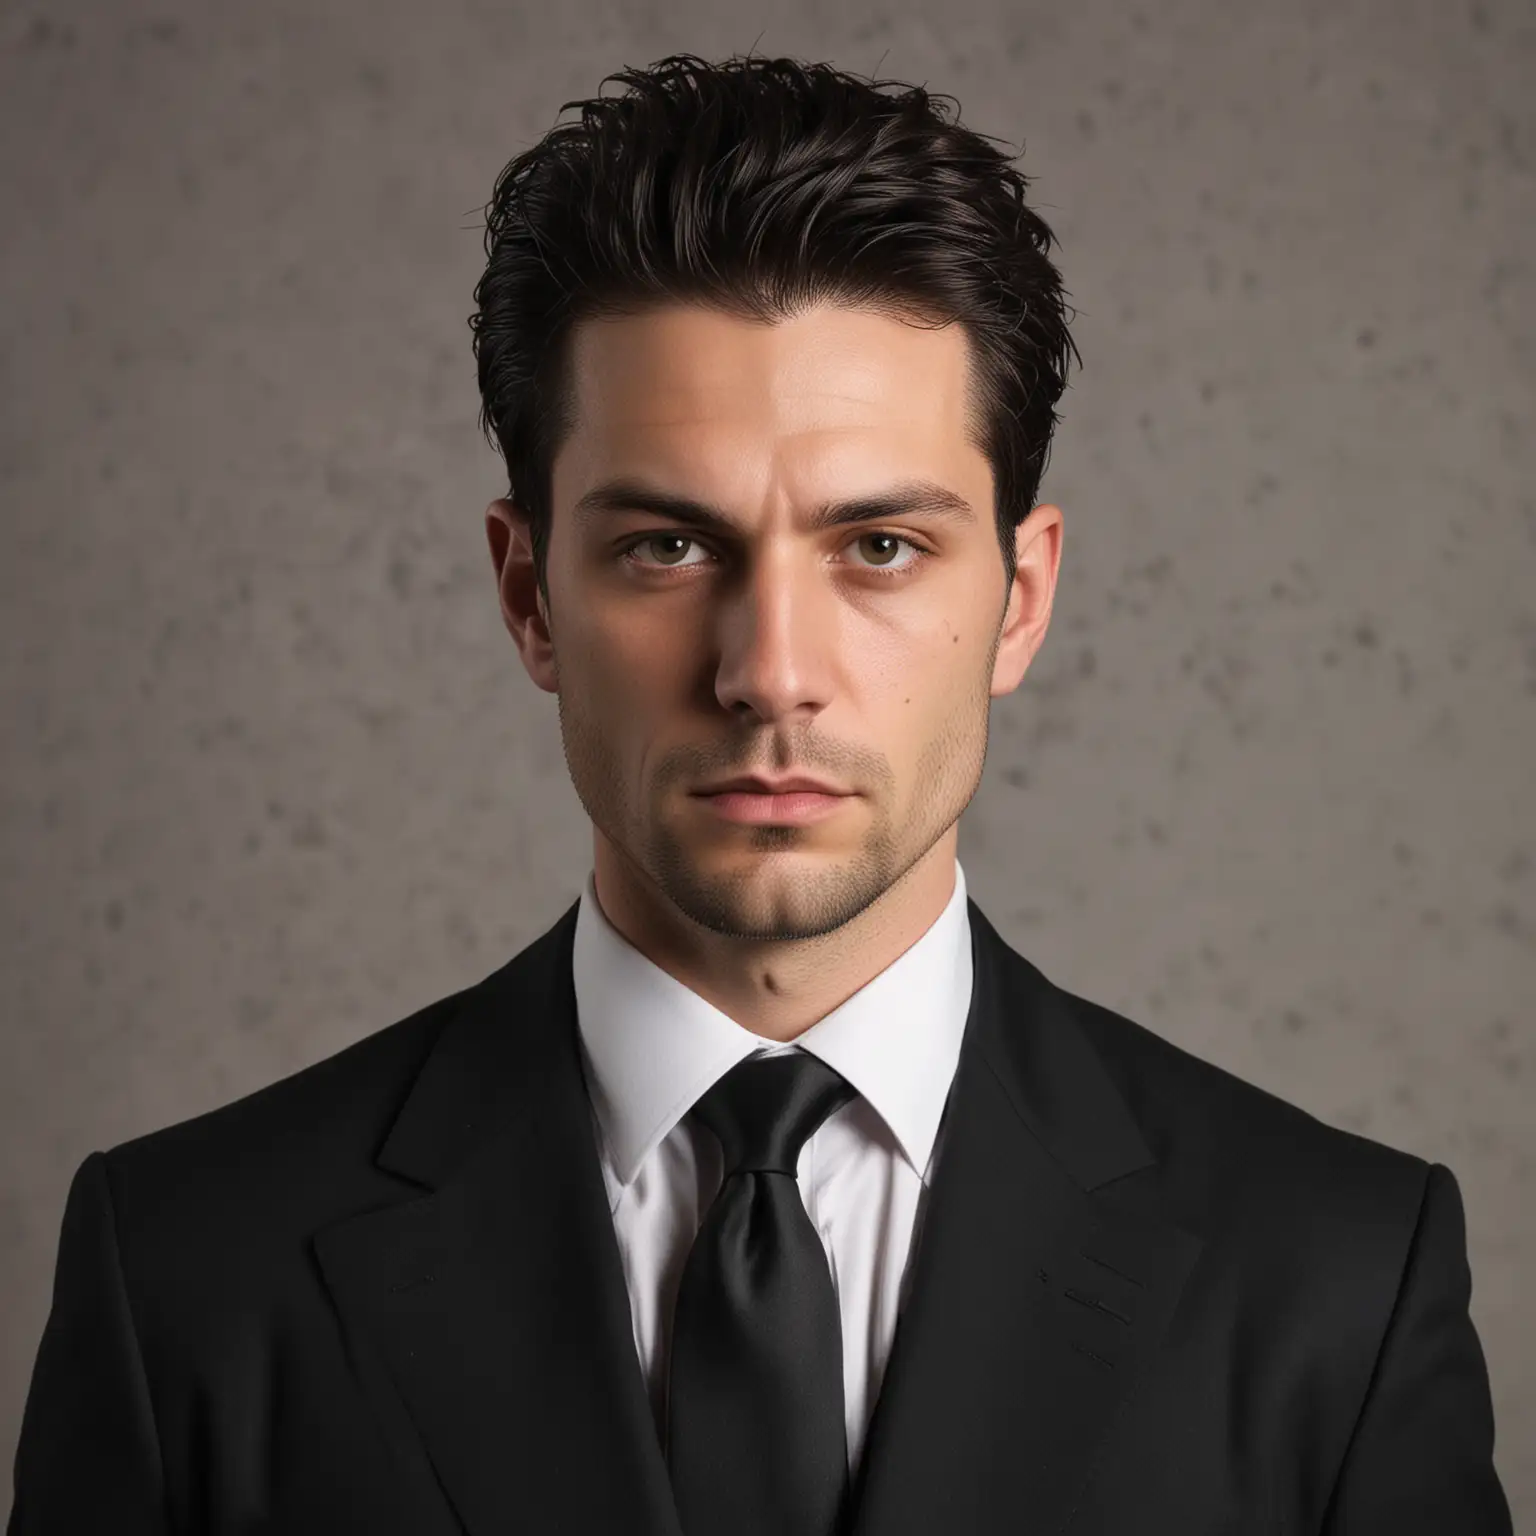 Confident Businessman in Black Suit and Loose Tie